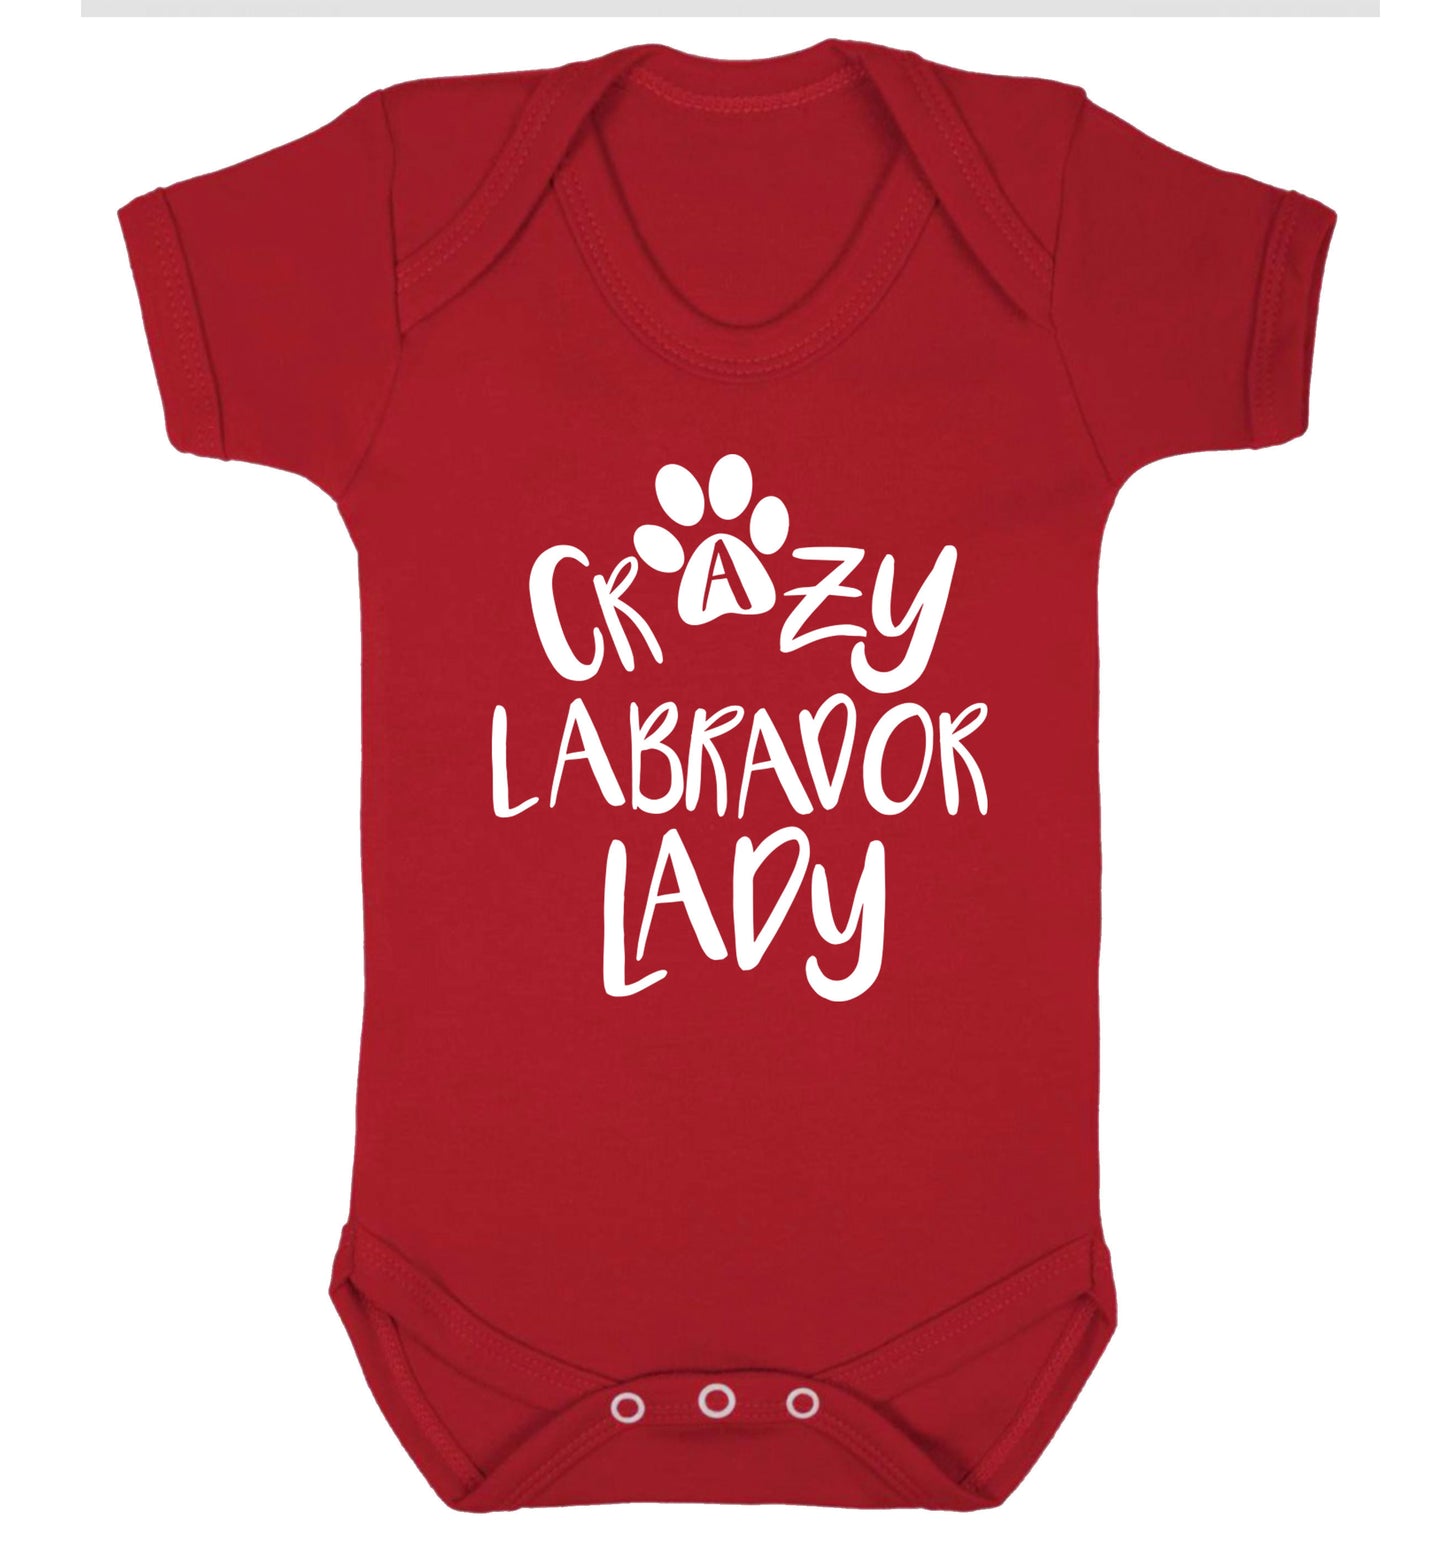 Crazy labrador lady Baby Vest red 18-24 months